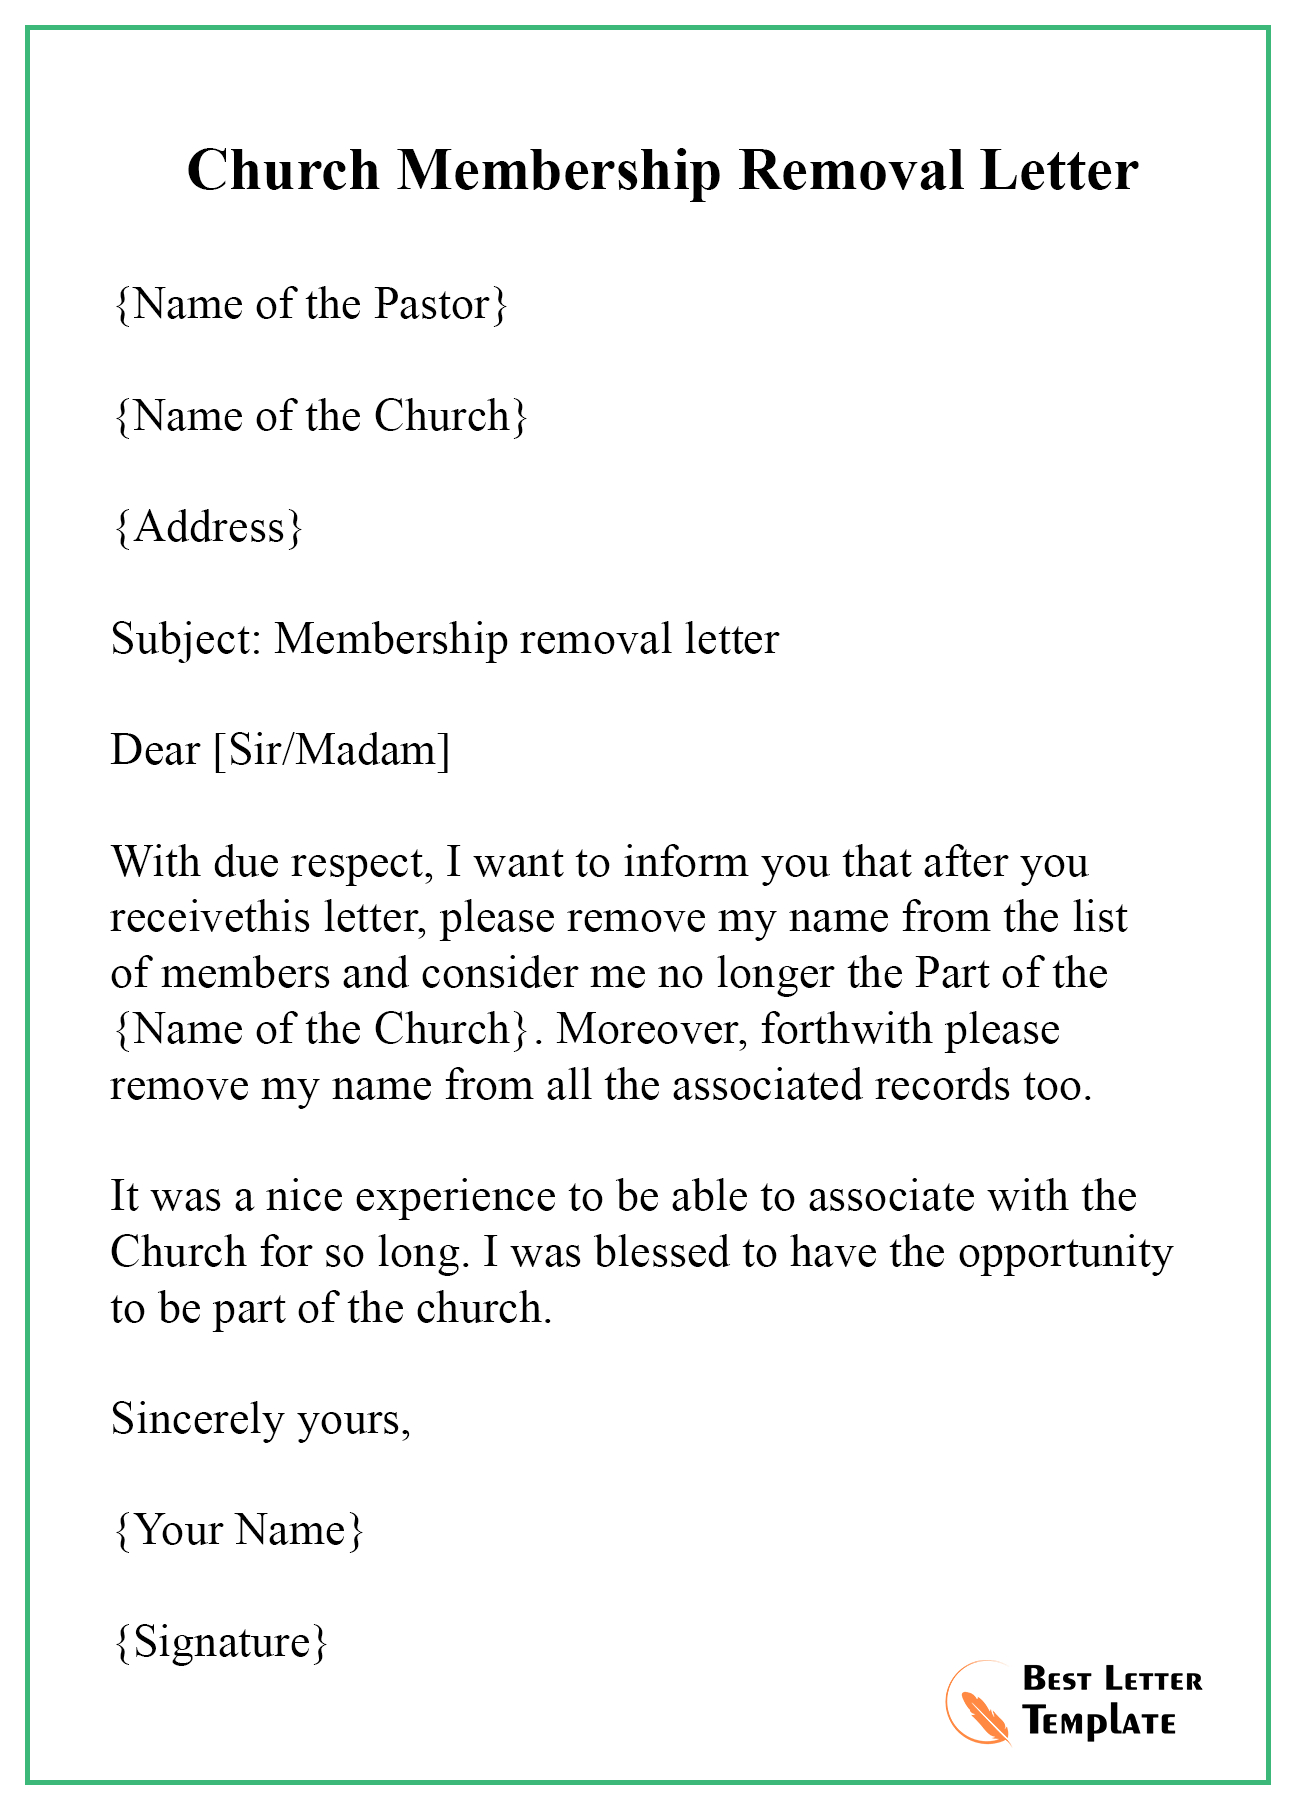 Church Membership Removal Letter Best Letter Template regarding size 1300 X 1806